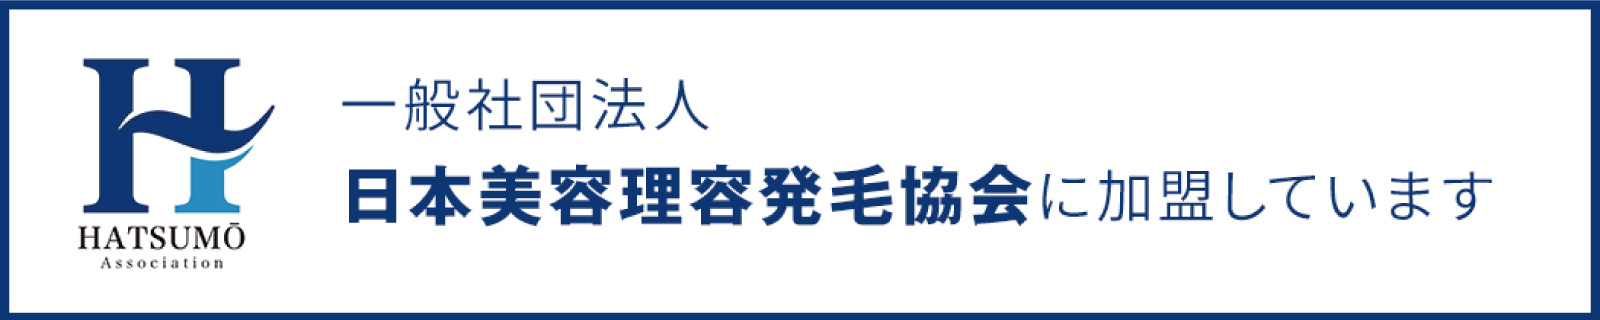 HATSUMO Association　一般社団法人 日本美容理容発毛協会に加盟しています